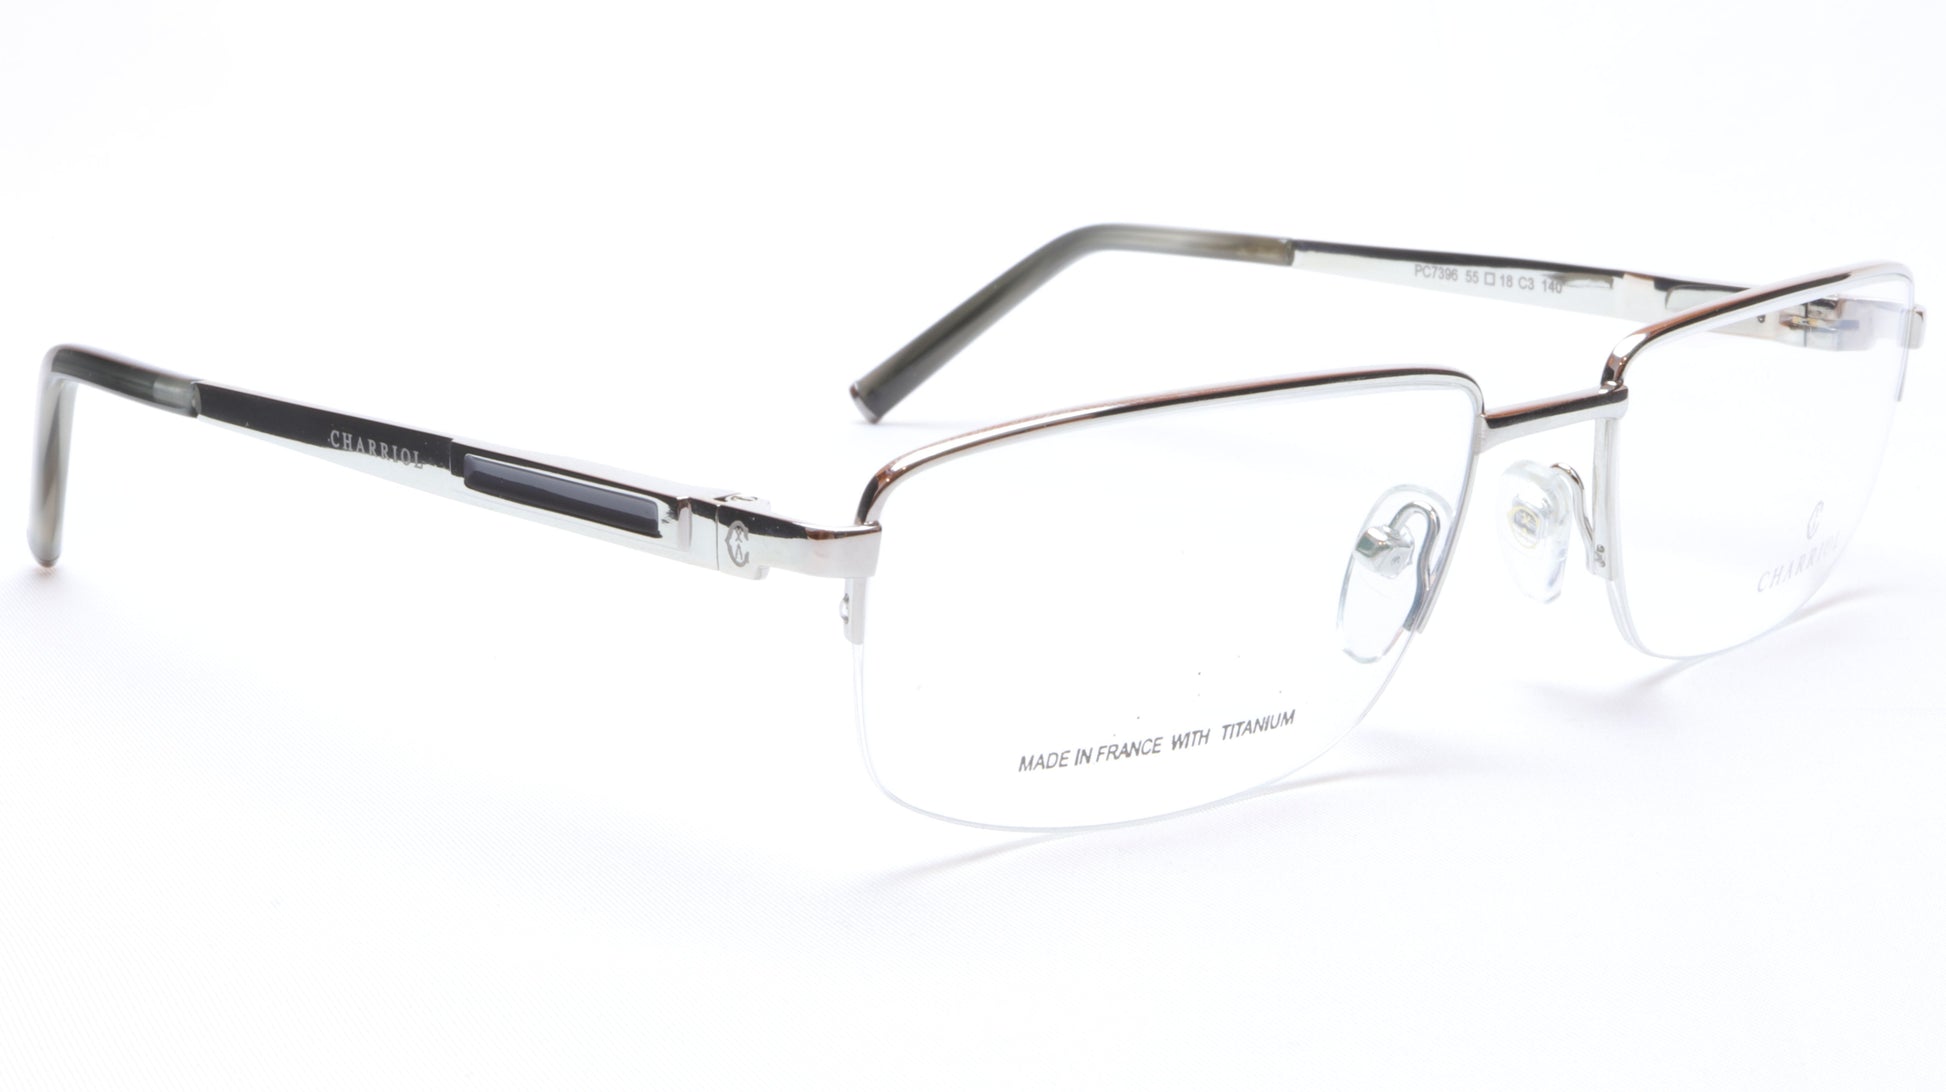 Charriol Eyeglasses Frame PC7396 C3 Silver Titanium France Made 55-18-140 - Frame Bay